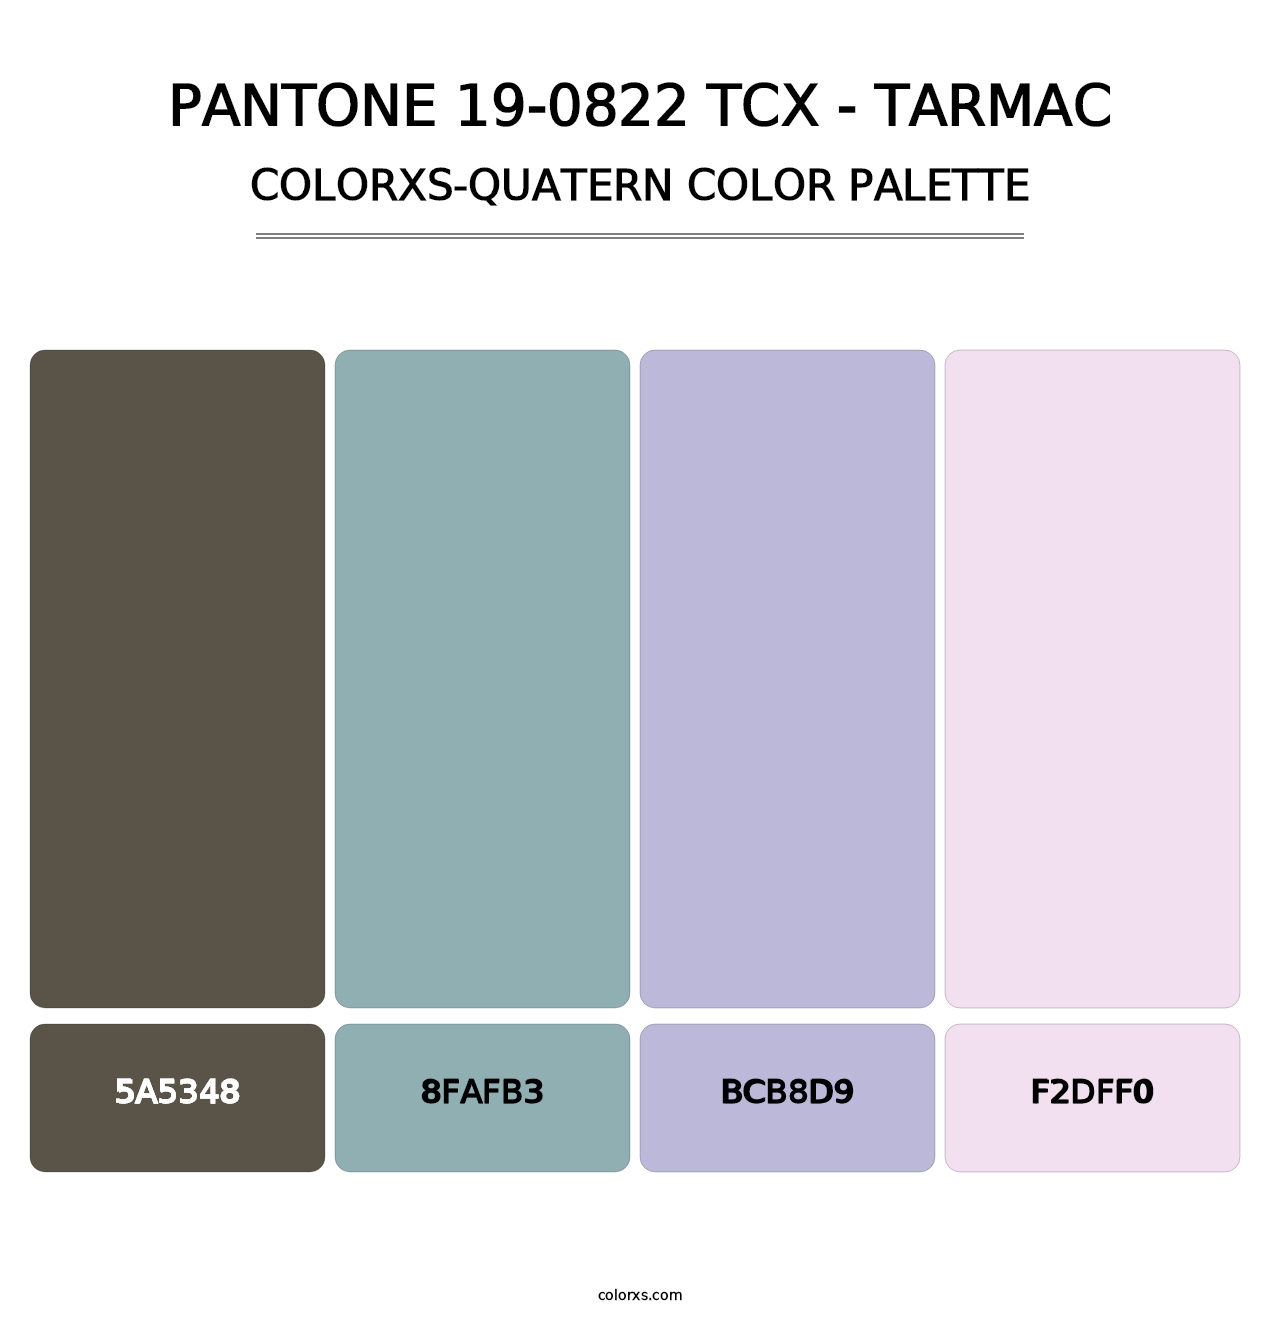 PANTONE 19-0822 TCX - Tarmac - Colorxs Quatern Palette